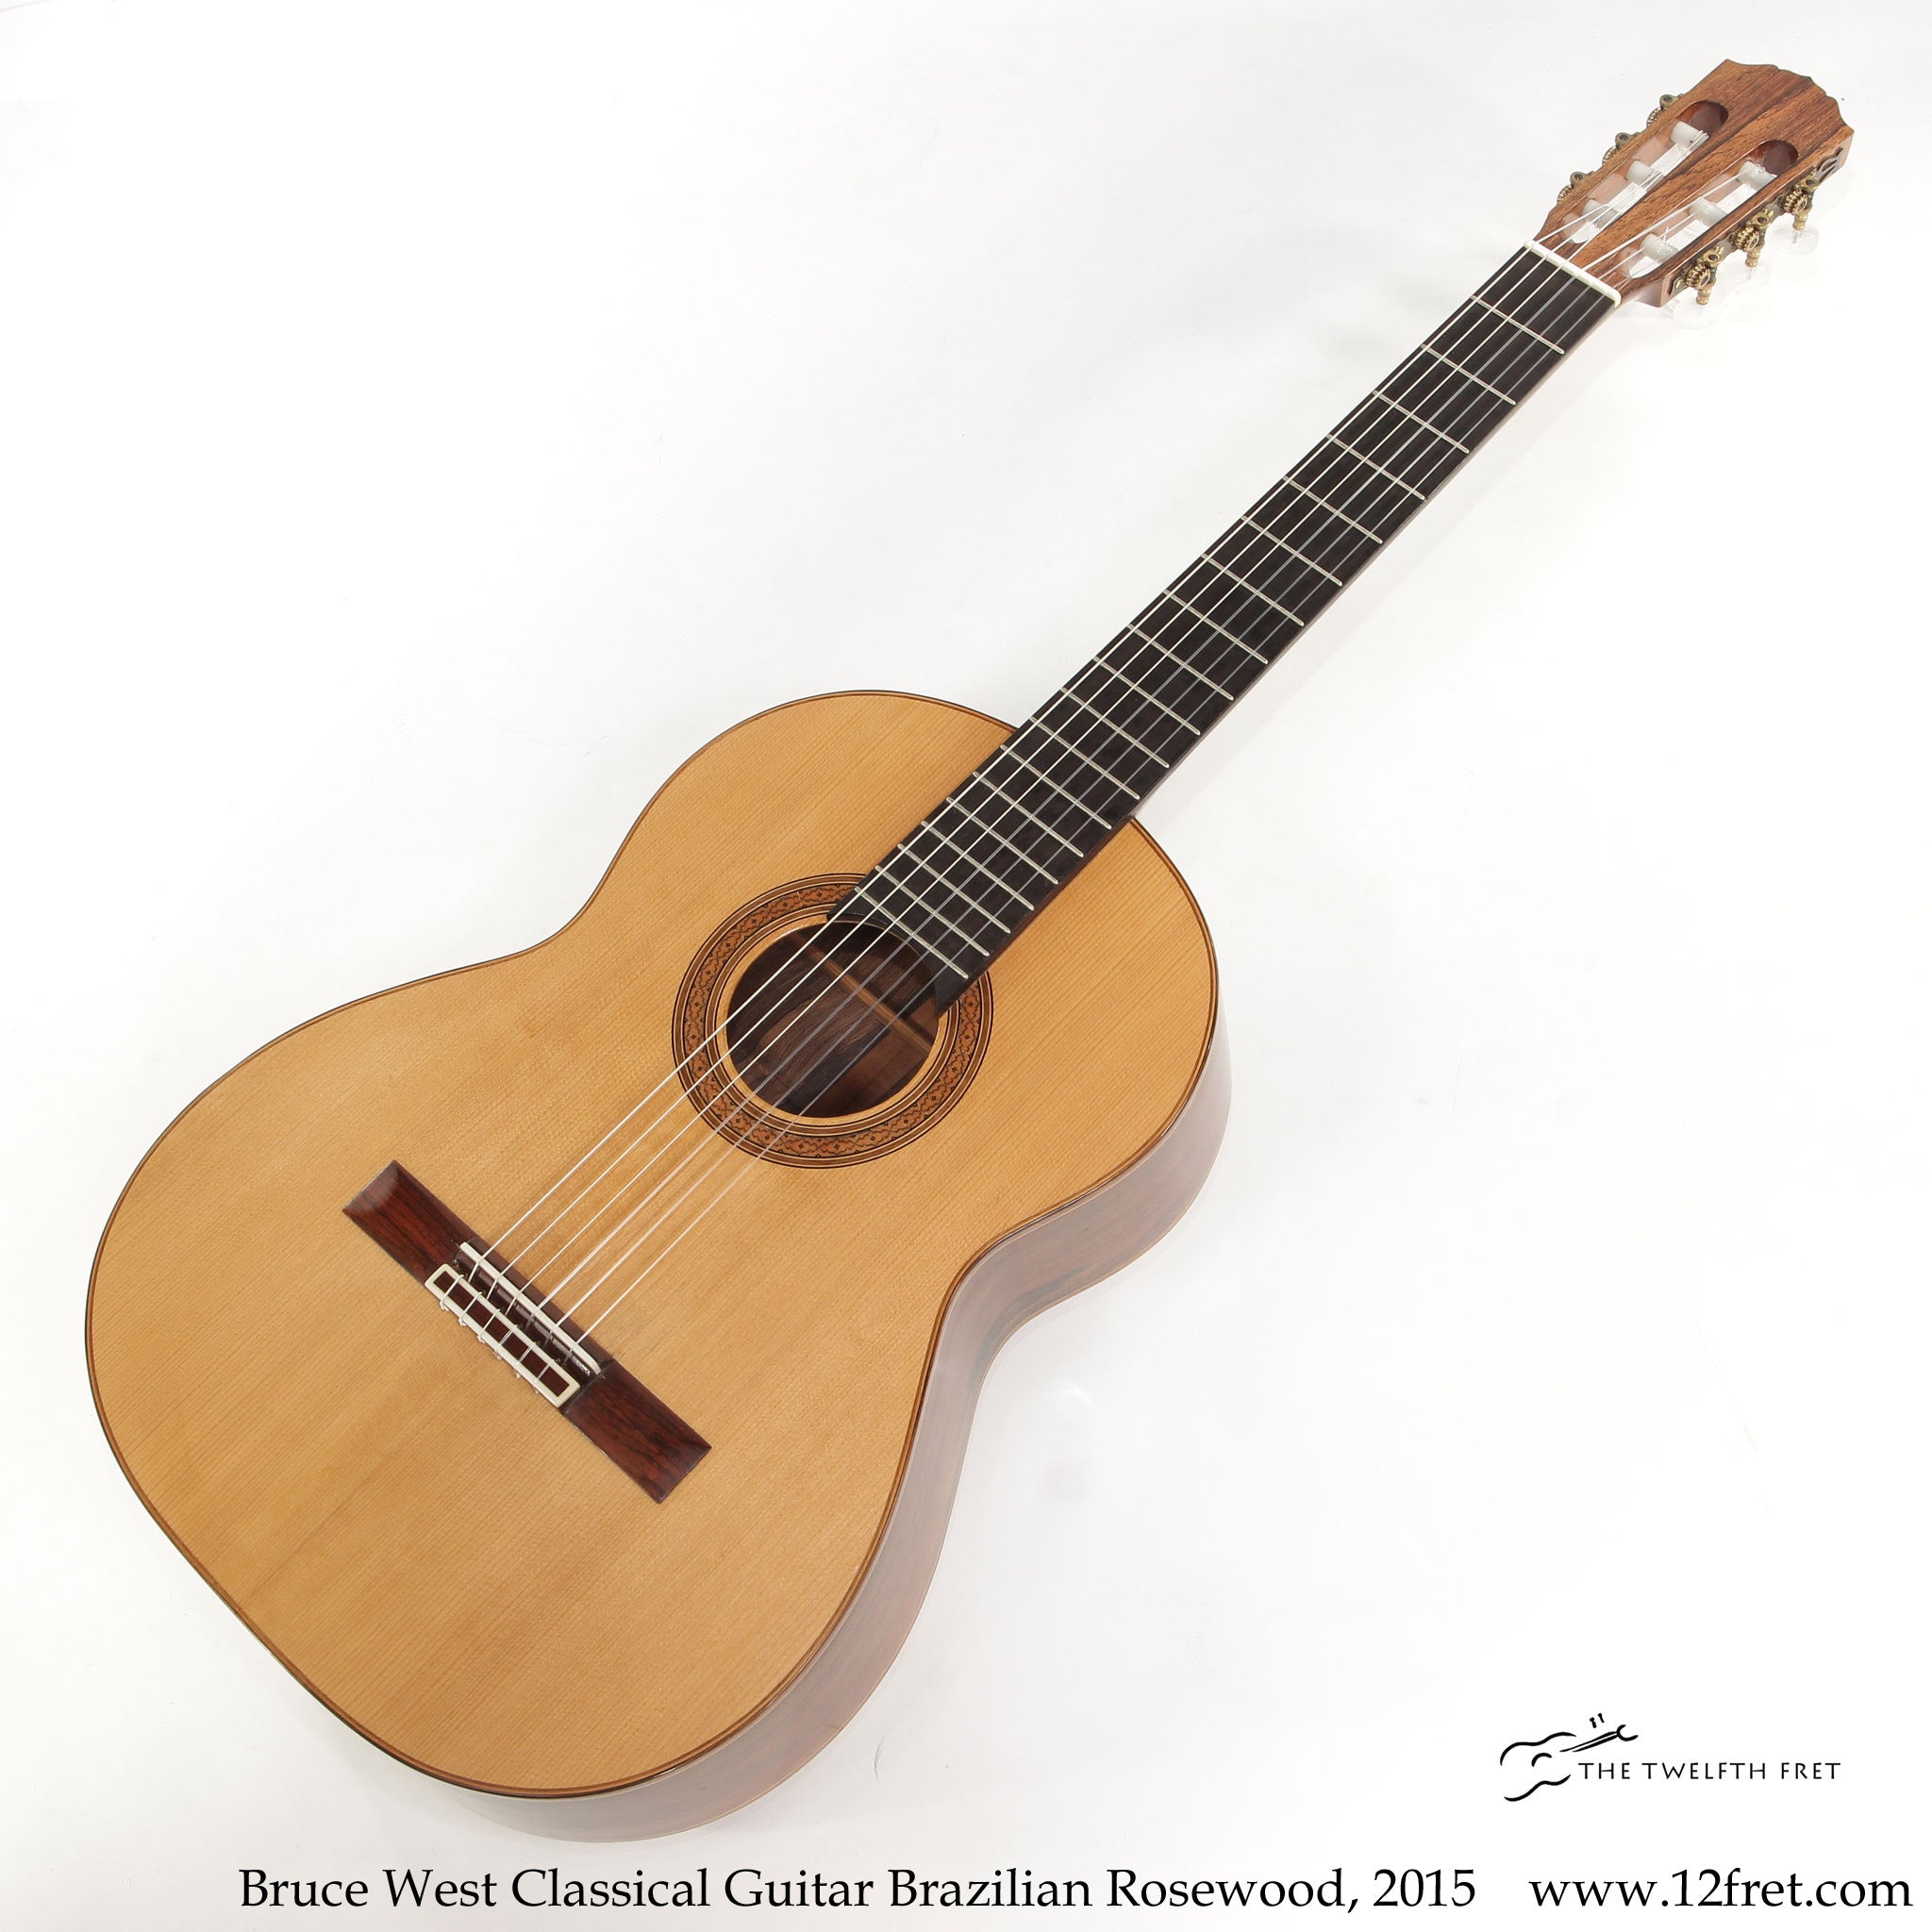 Bruce West Classical Guitar Brazilian Rosewood, 2015 - The Twelfth Fret